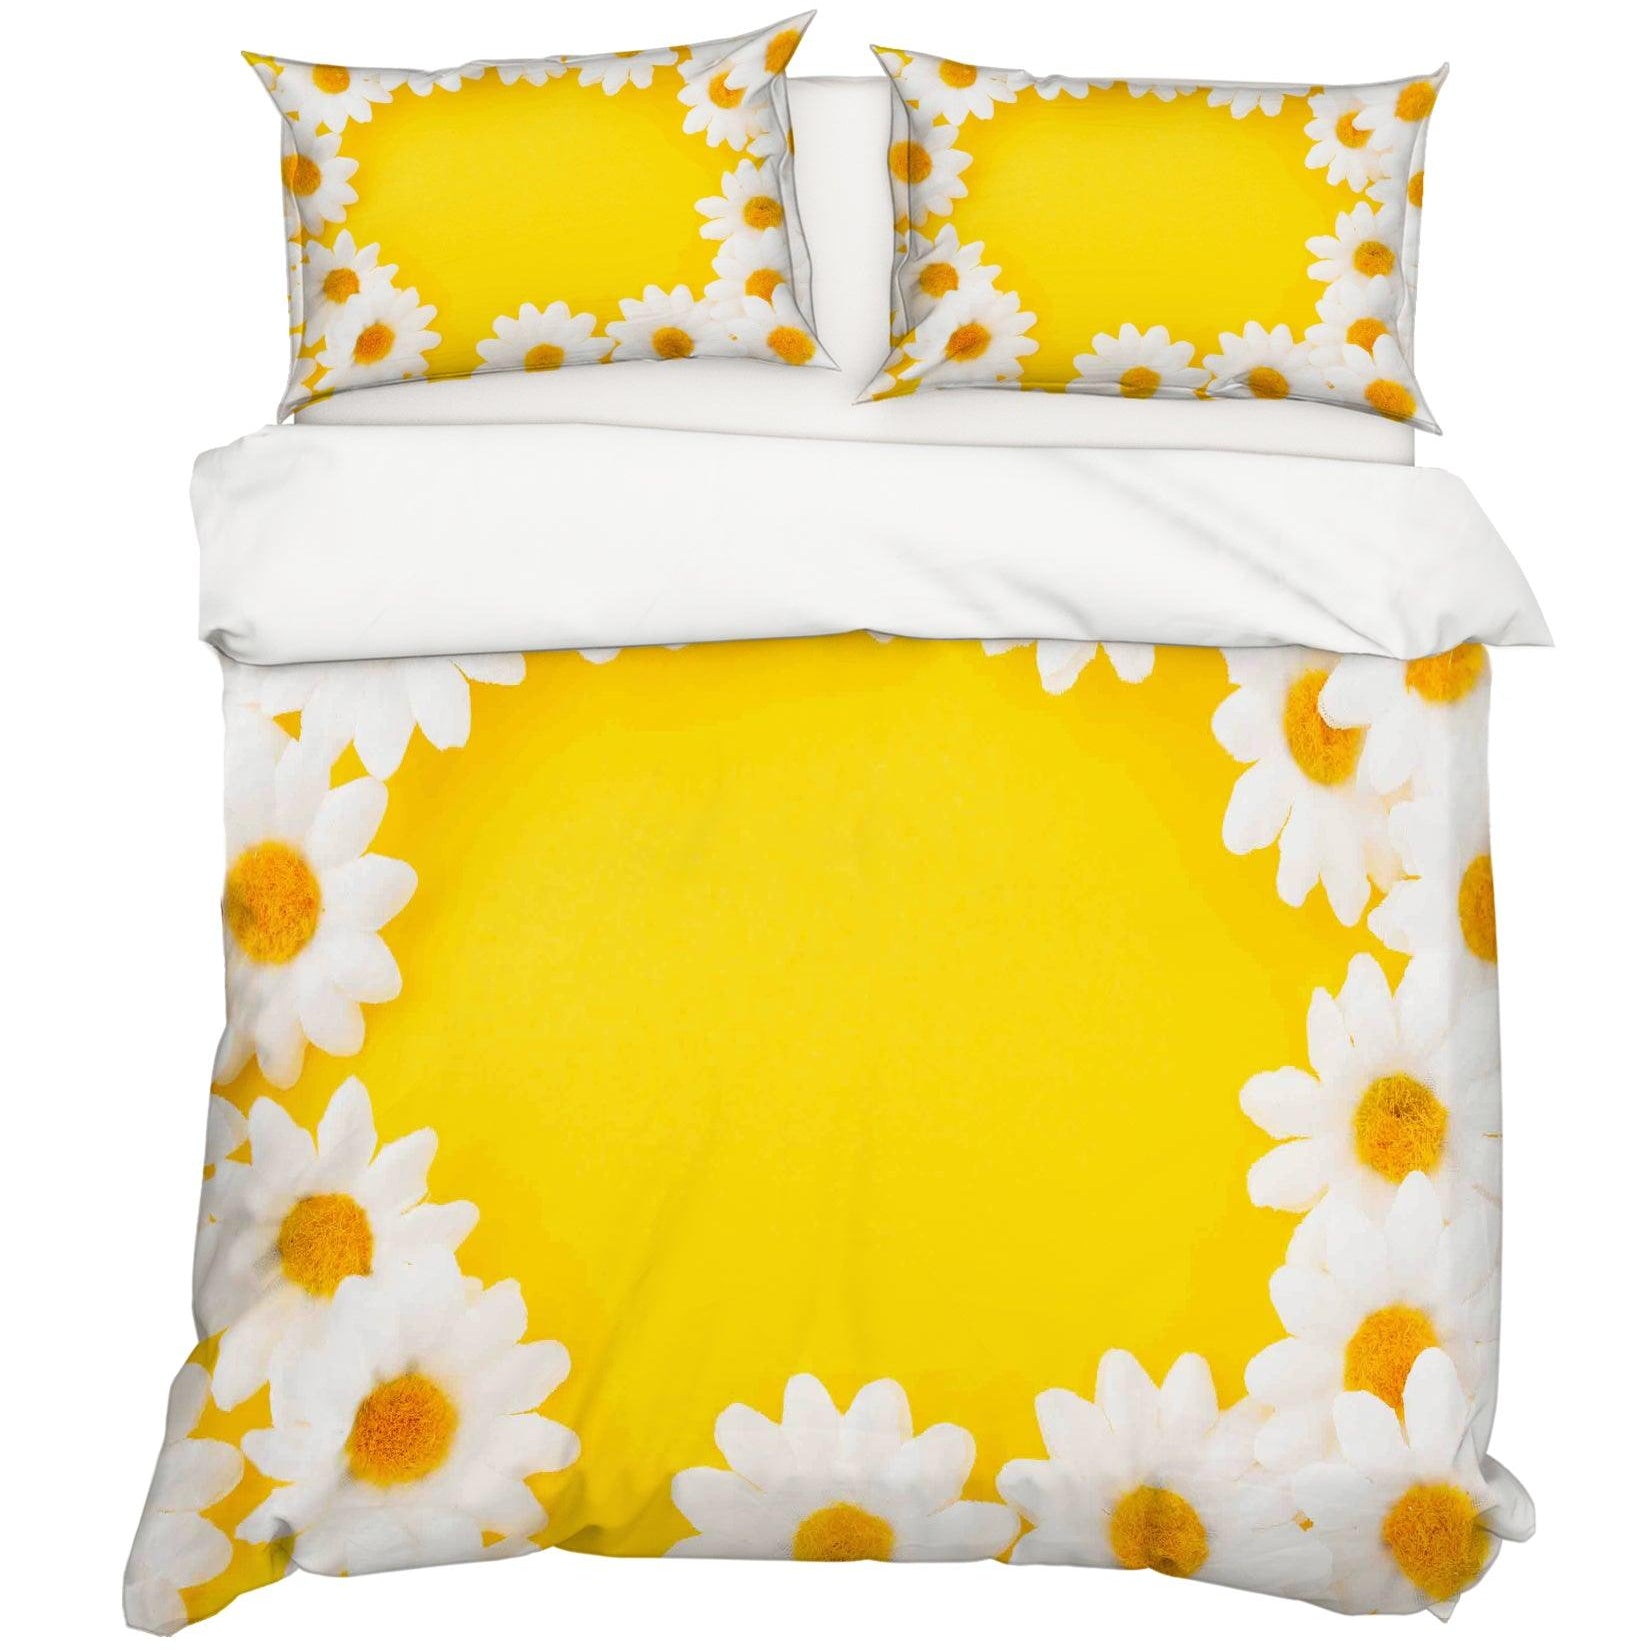 3D White Daisy Yellow Quilt Cover Set Bedding Set Pillowcases 15- Jess Art Decoration